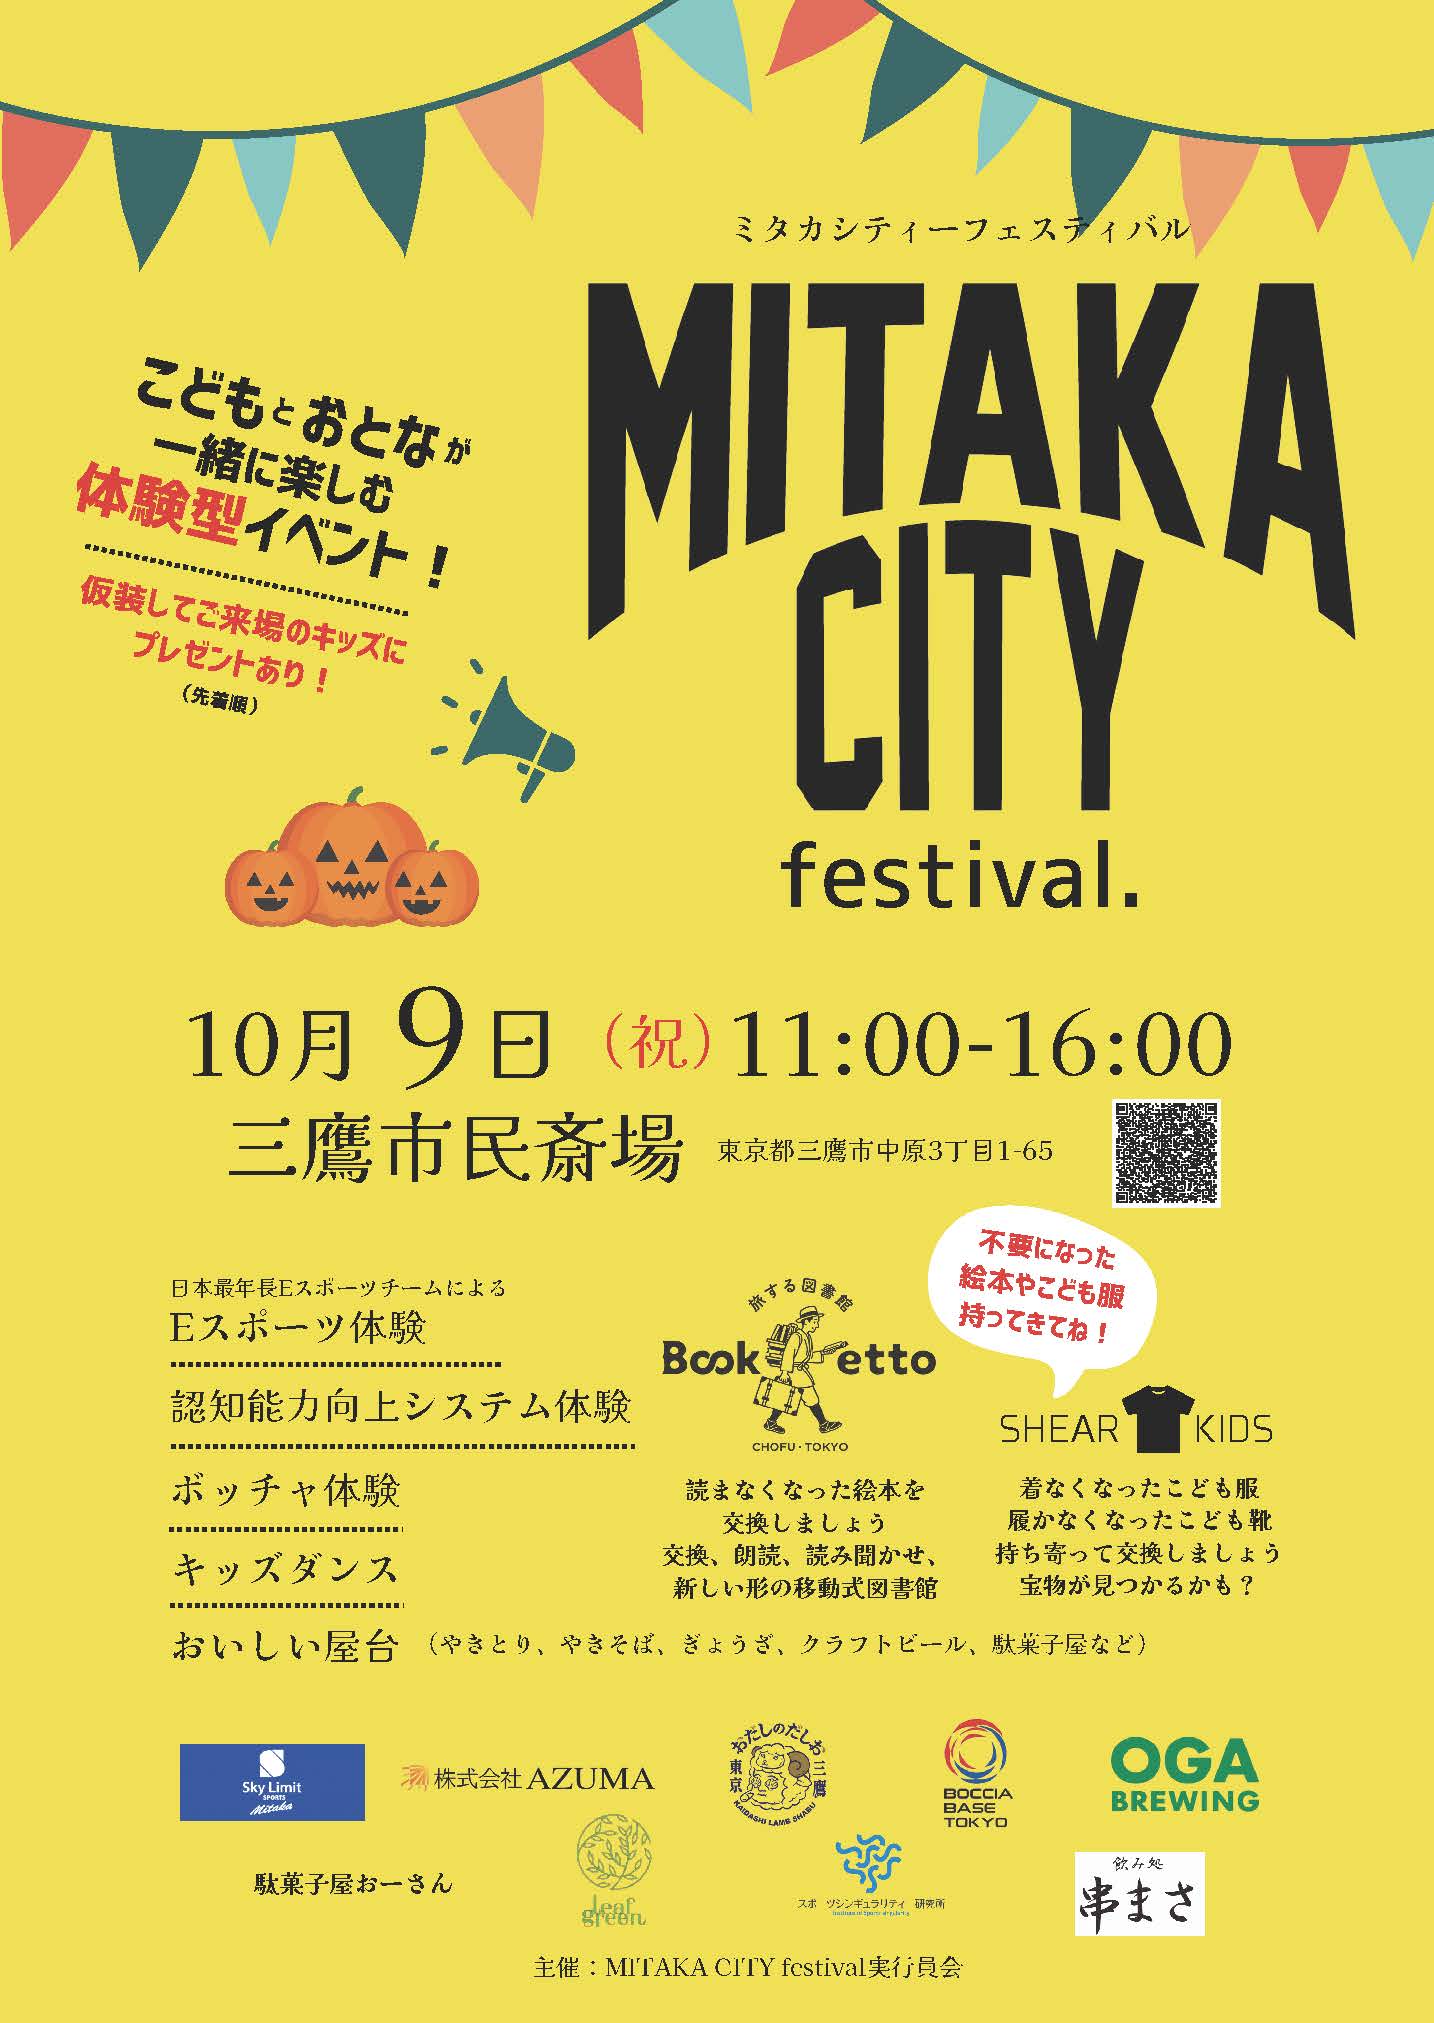 MITAKA CITY festivalちらし